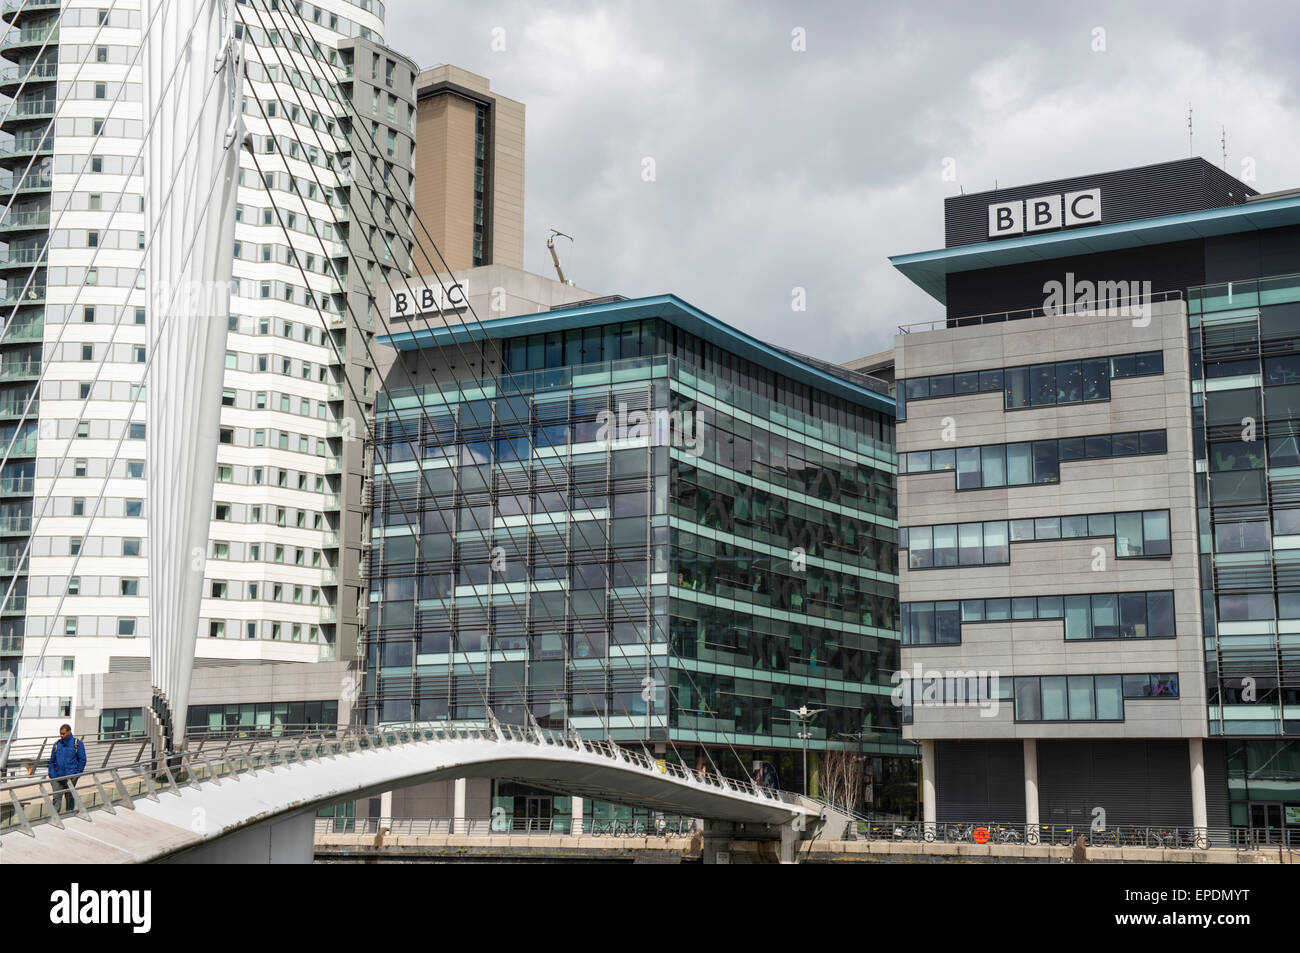 Exterior Manchester Uk Exterior of BBC TV studios at Media City UK, Salford Quays, Manchester, England, UK